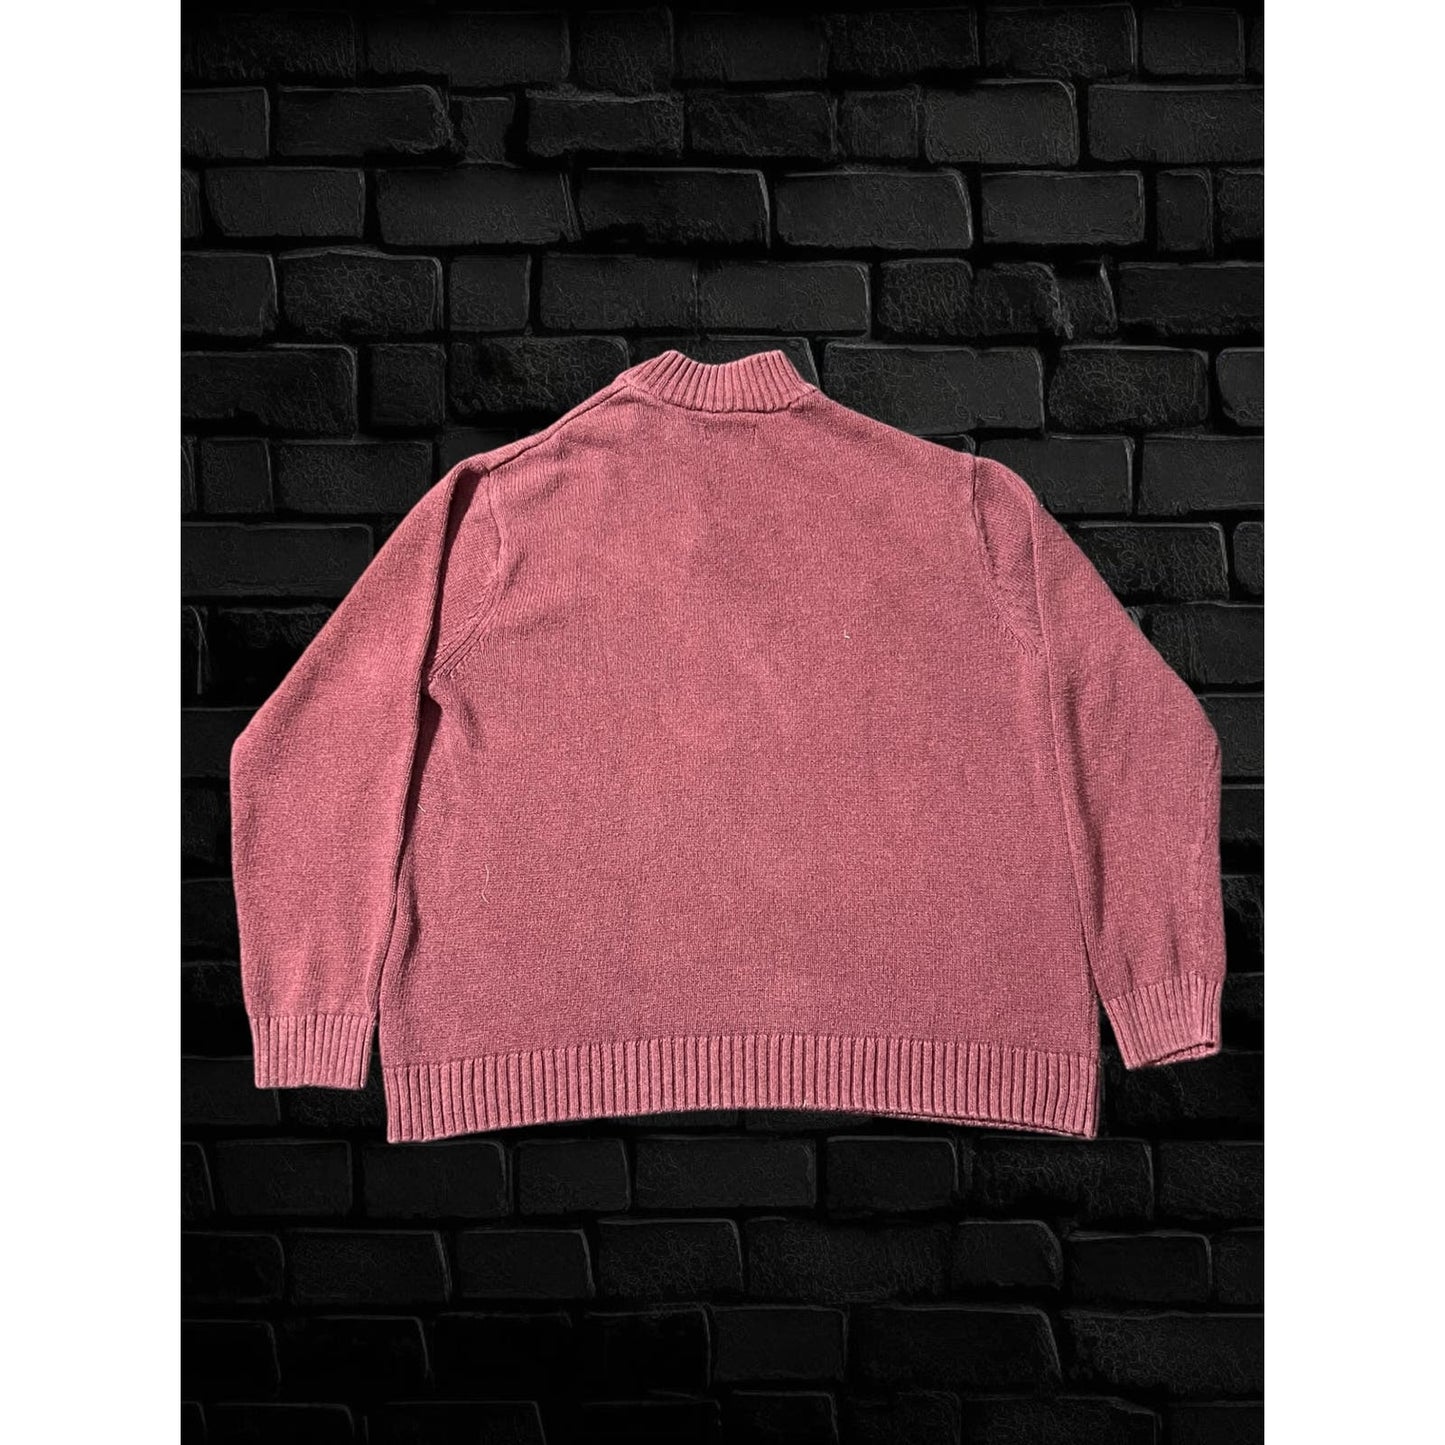 Vintage Y2K chaps sweater